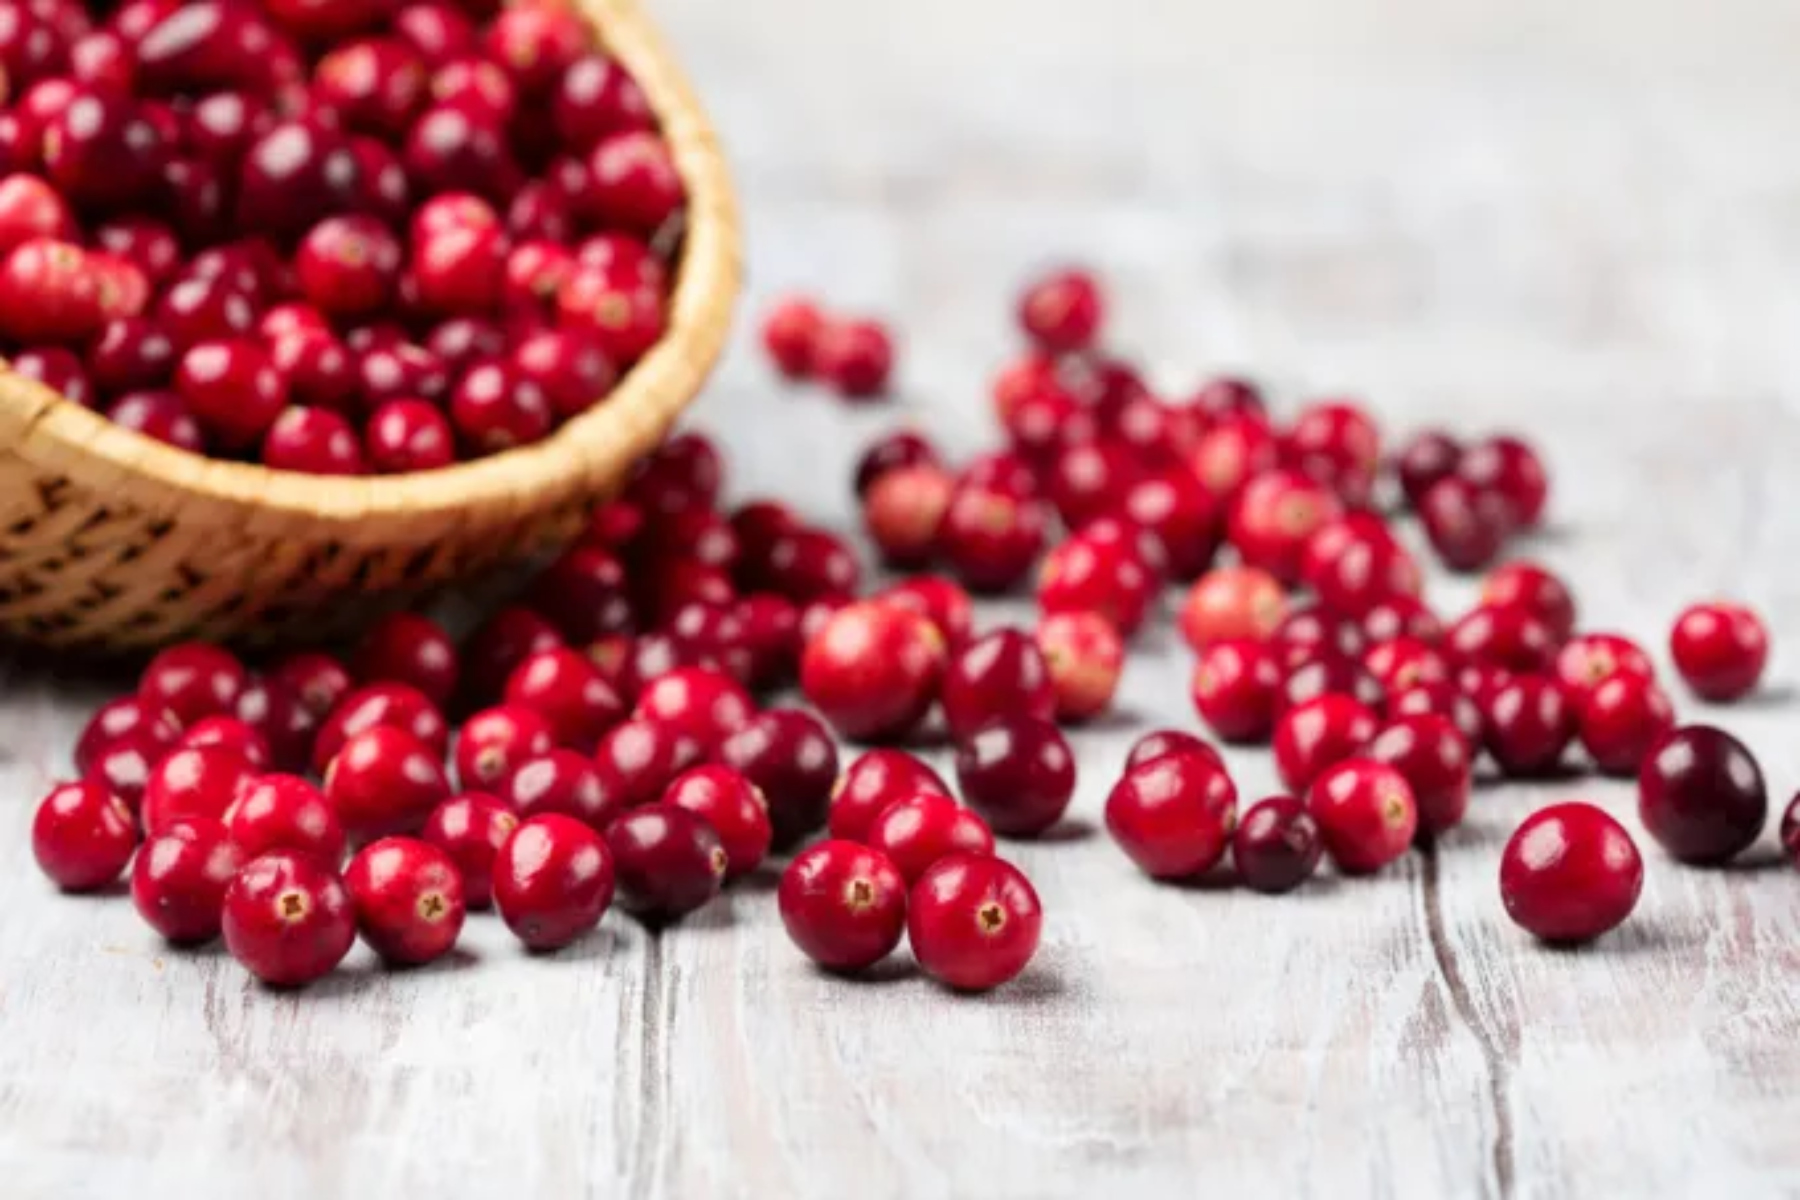 Cranberries: Ποια είναι η διατροφική αξία των Cranberries και πού μπορούμε να τα χρησιμοποιήσουμε;